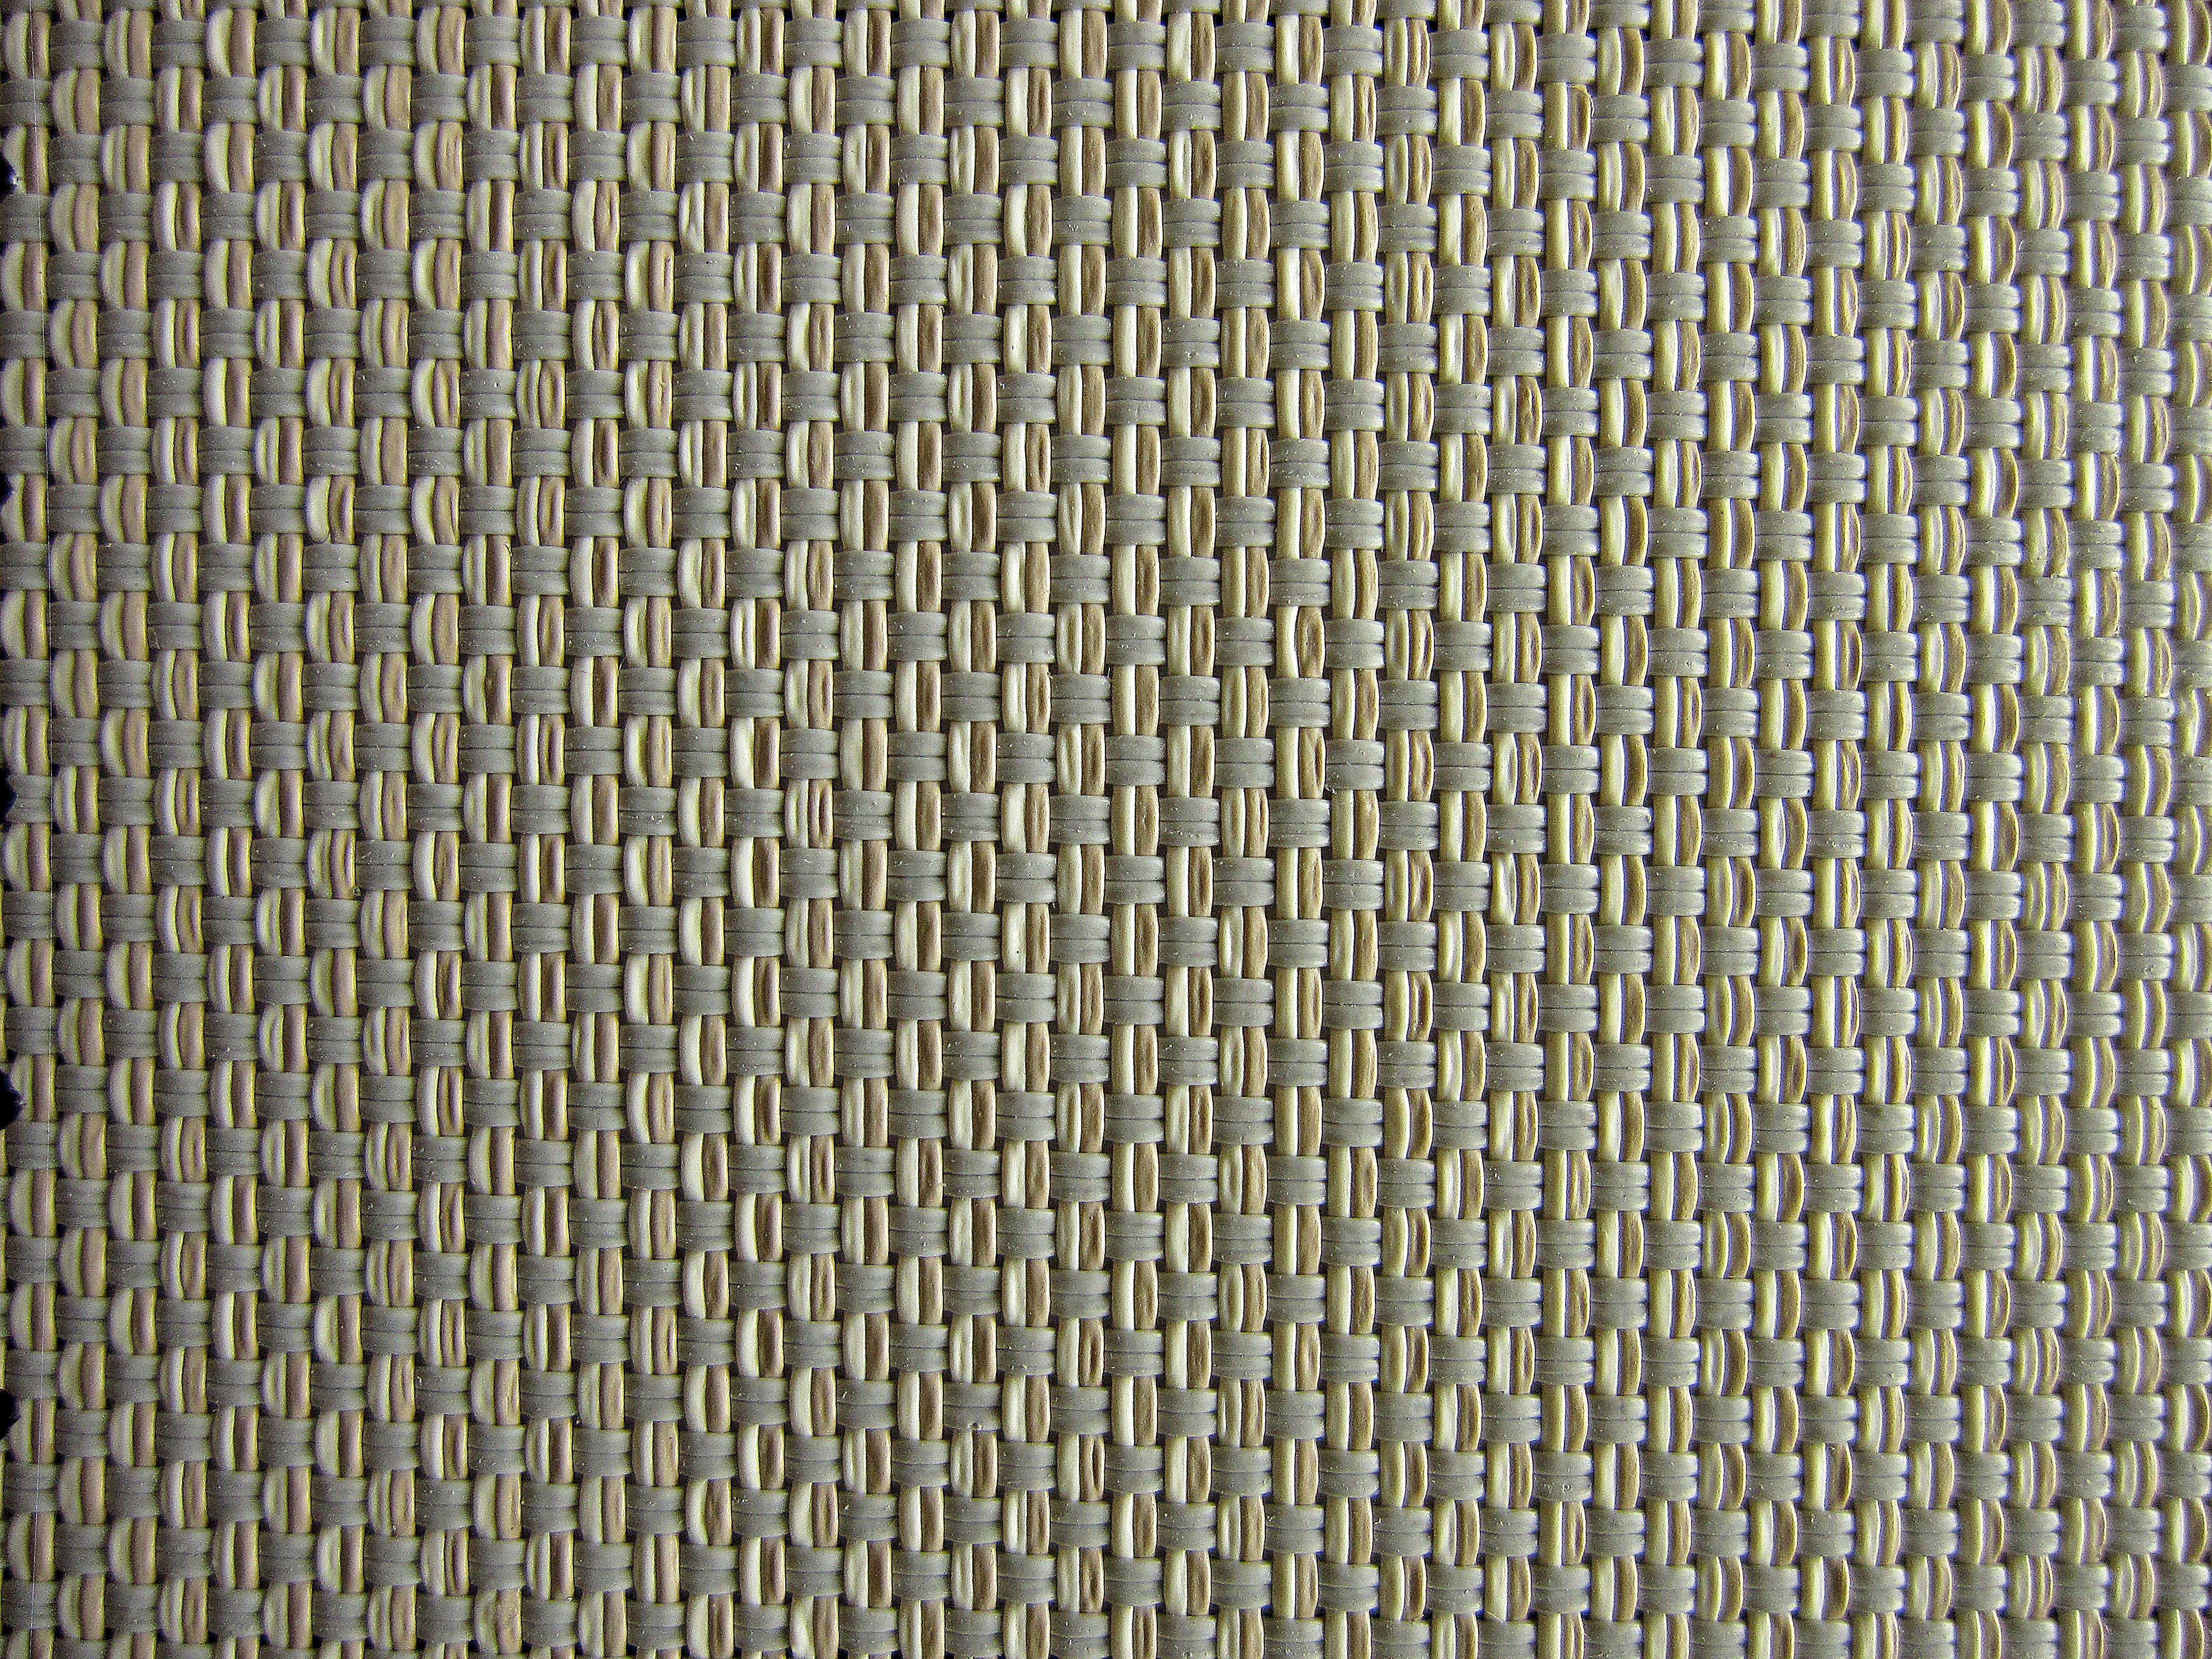 Sheerweave4500-Sandstone-Fabric.jpg